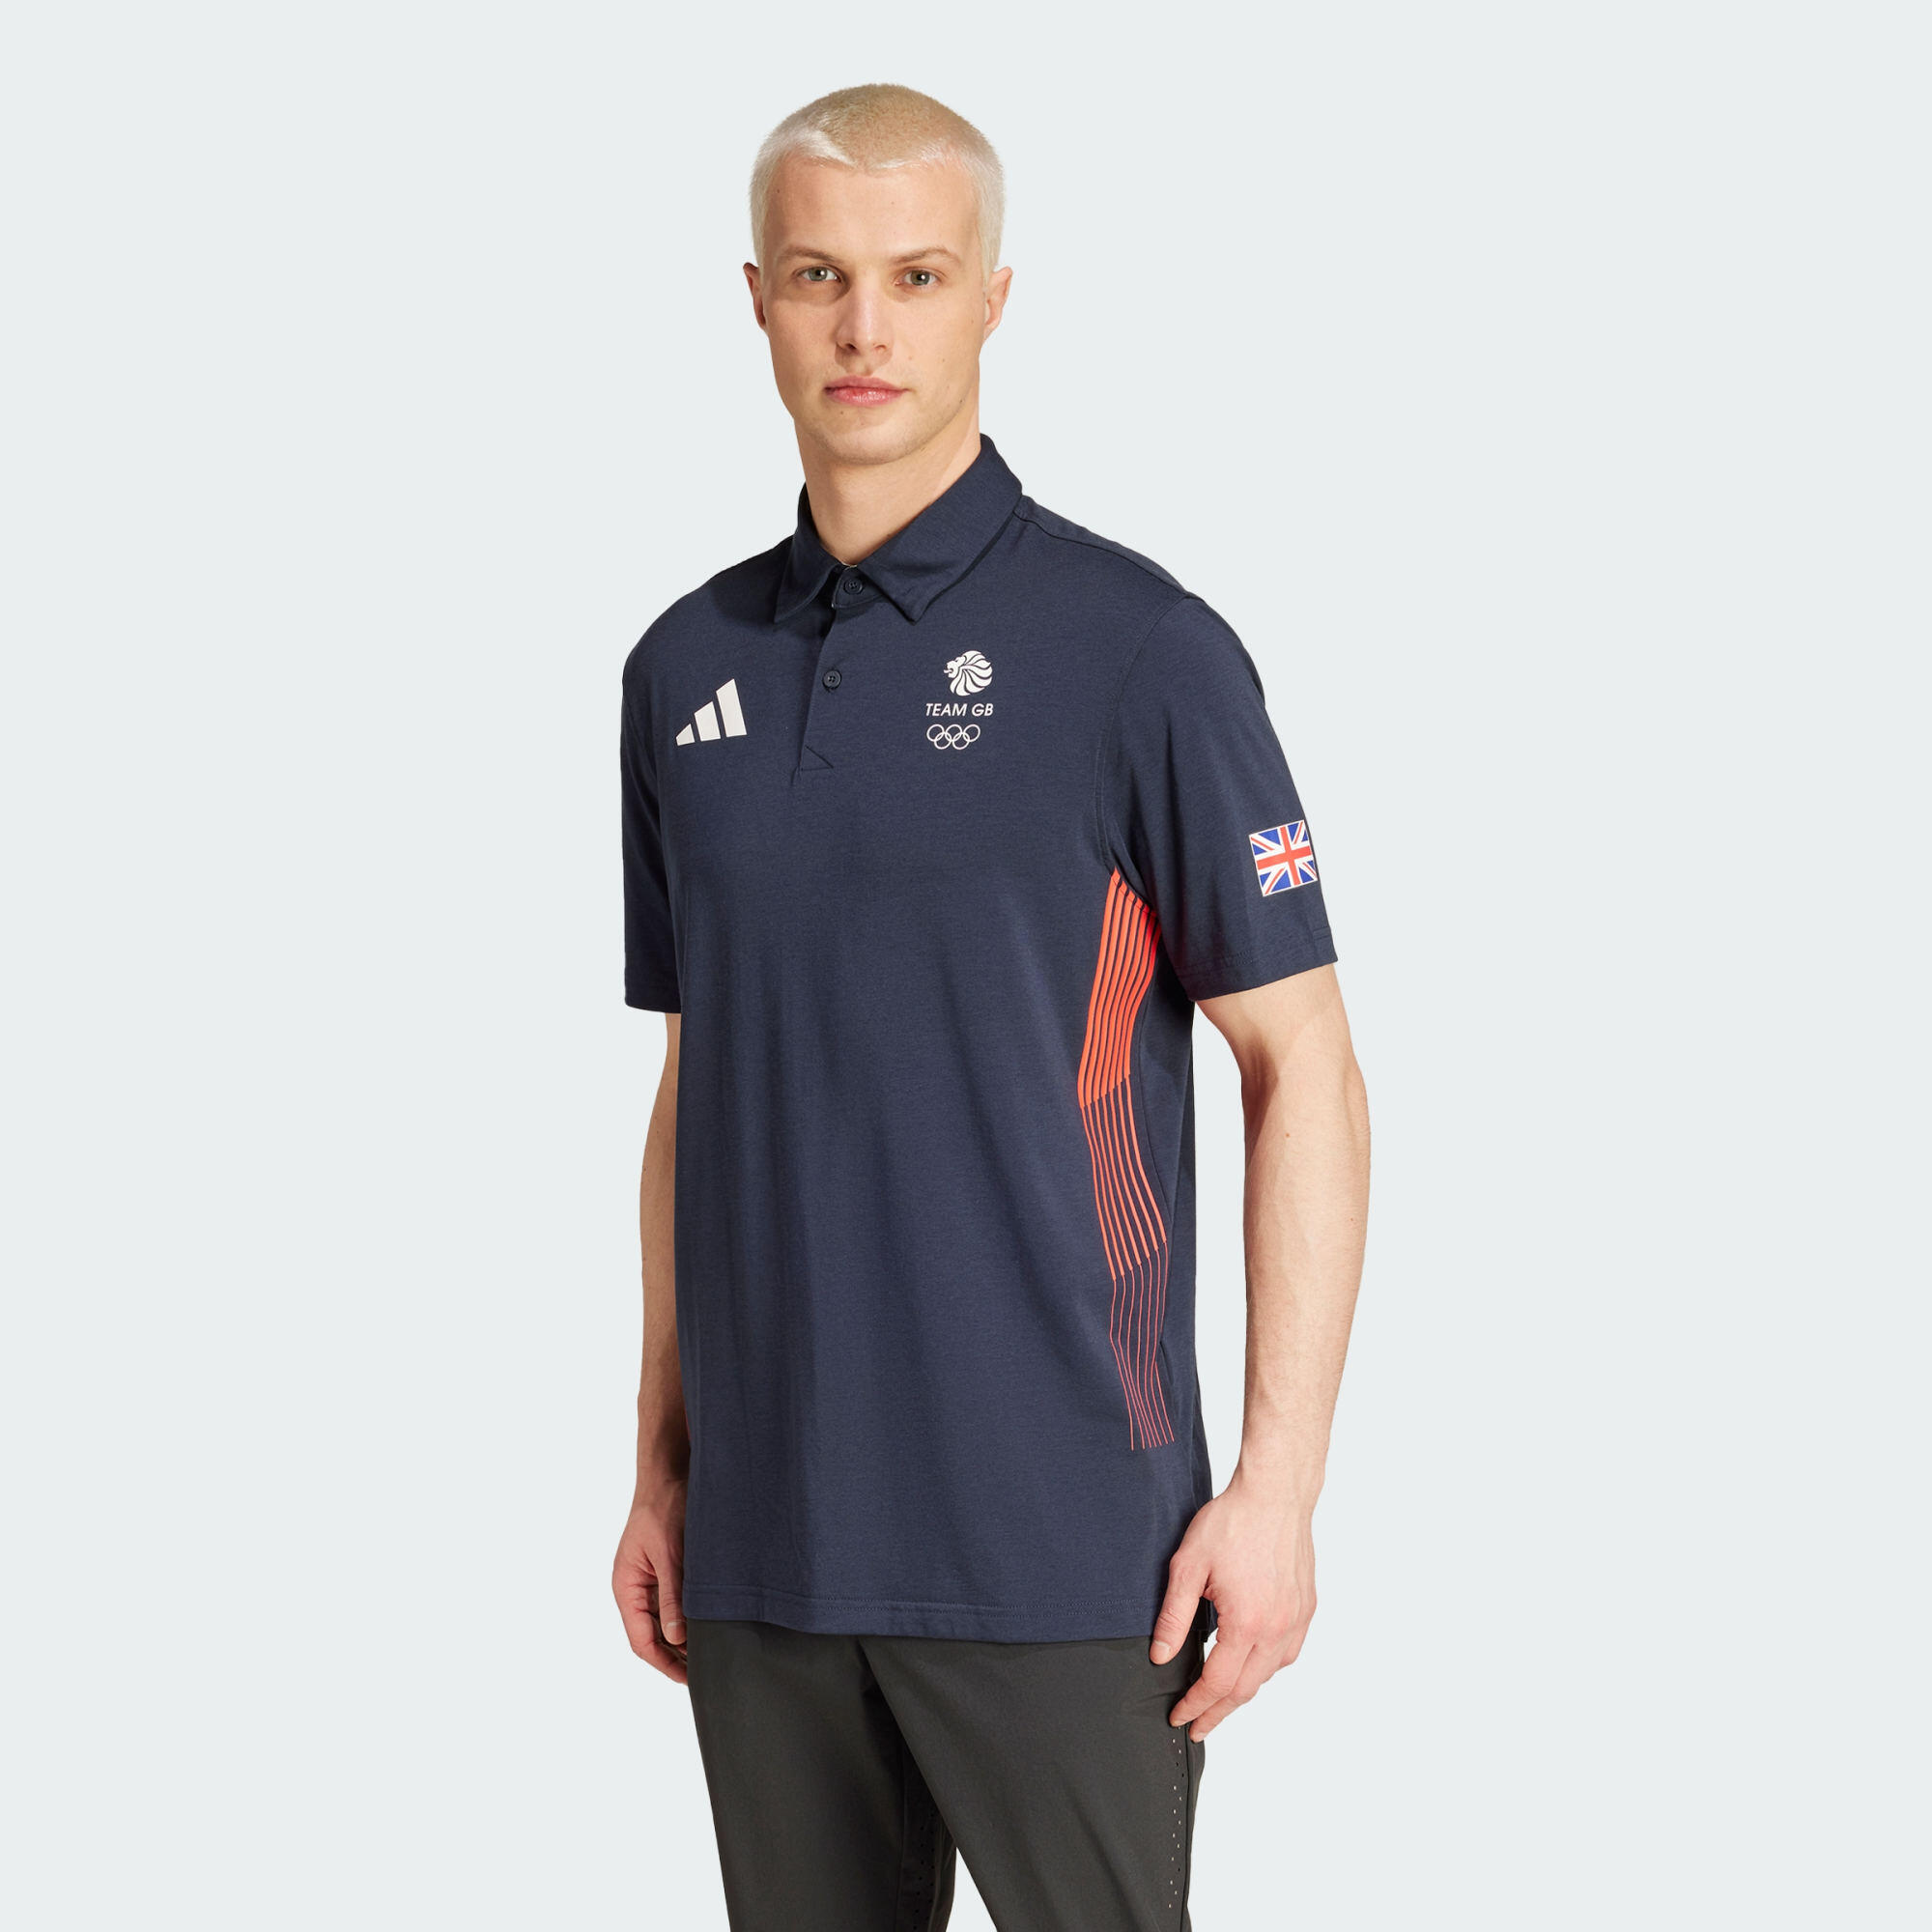 ADIDAS Team GB Golf Polo Shirt